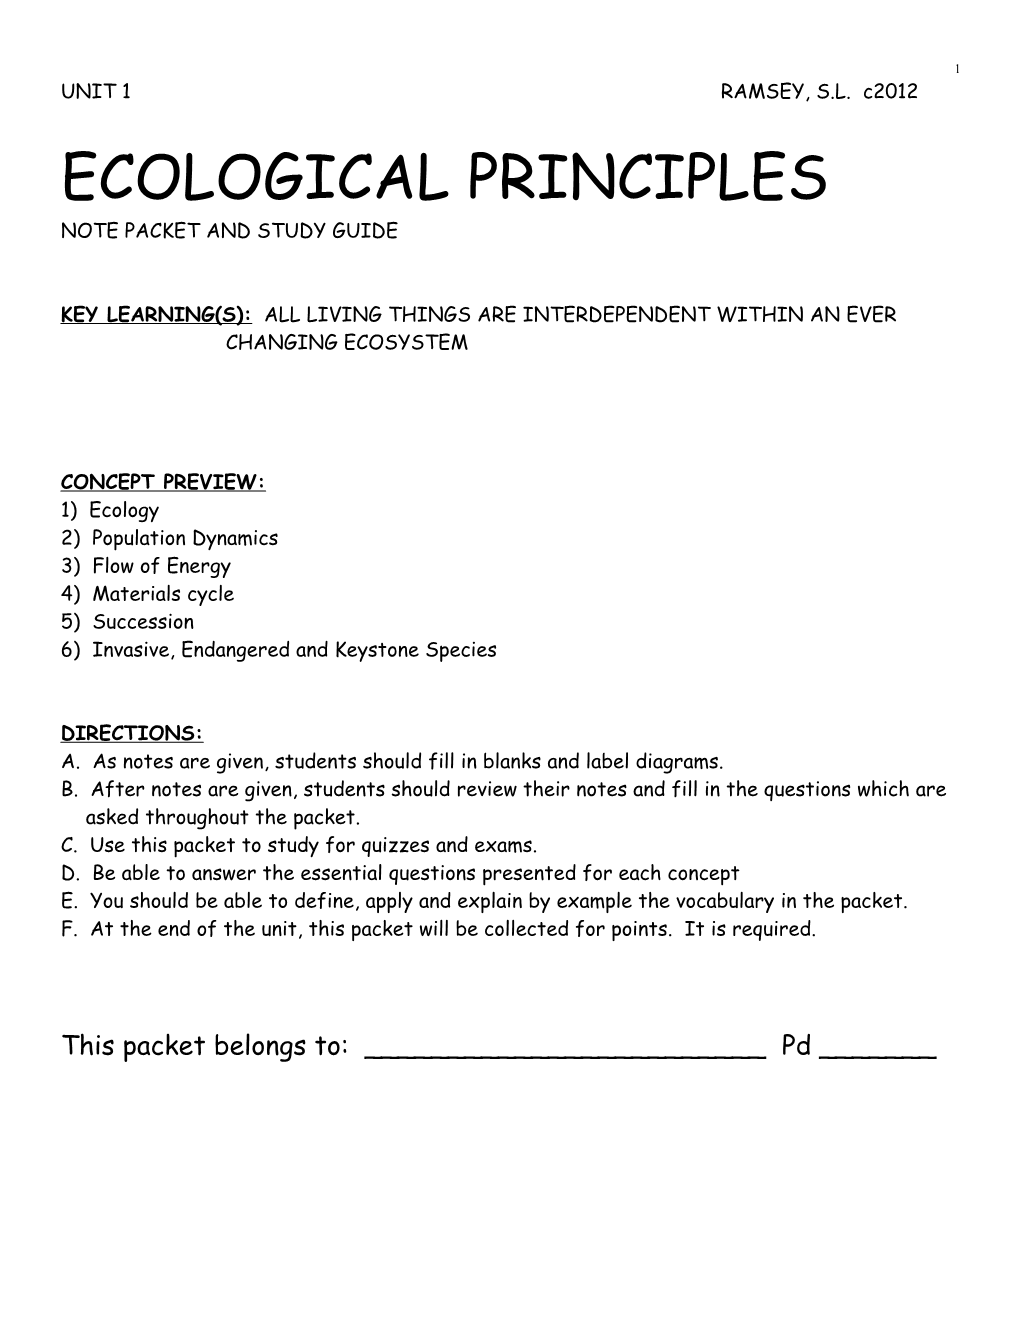 Ecological Principles Notes